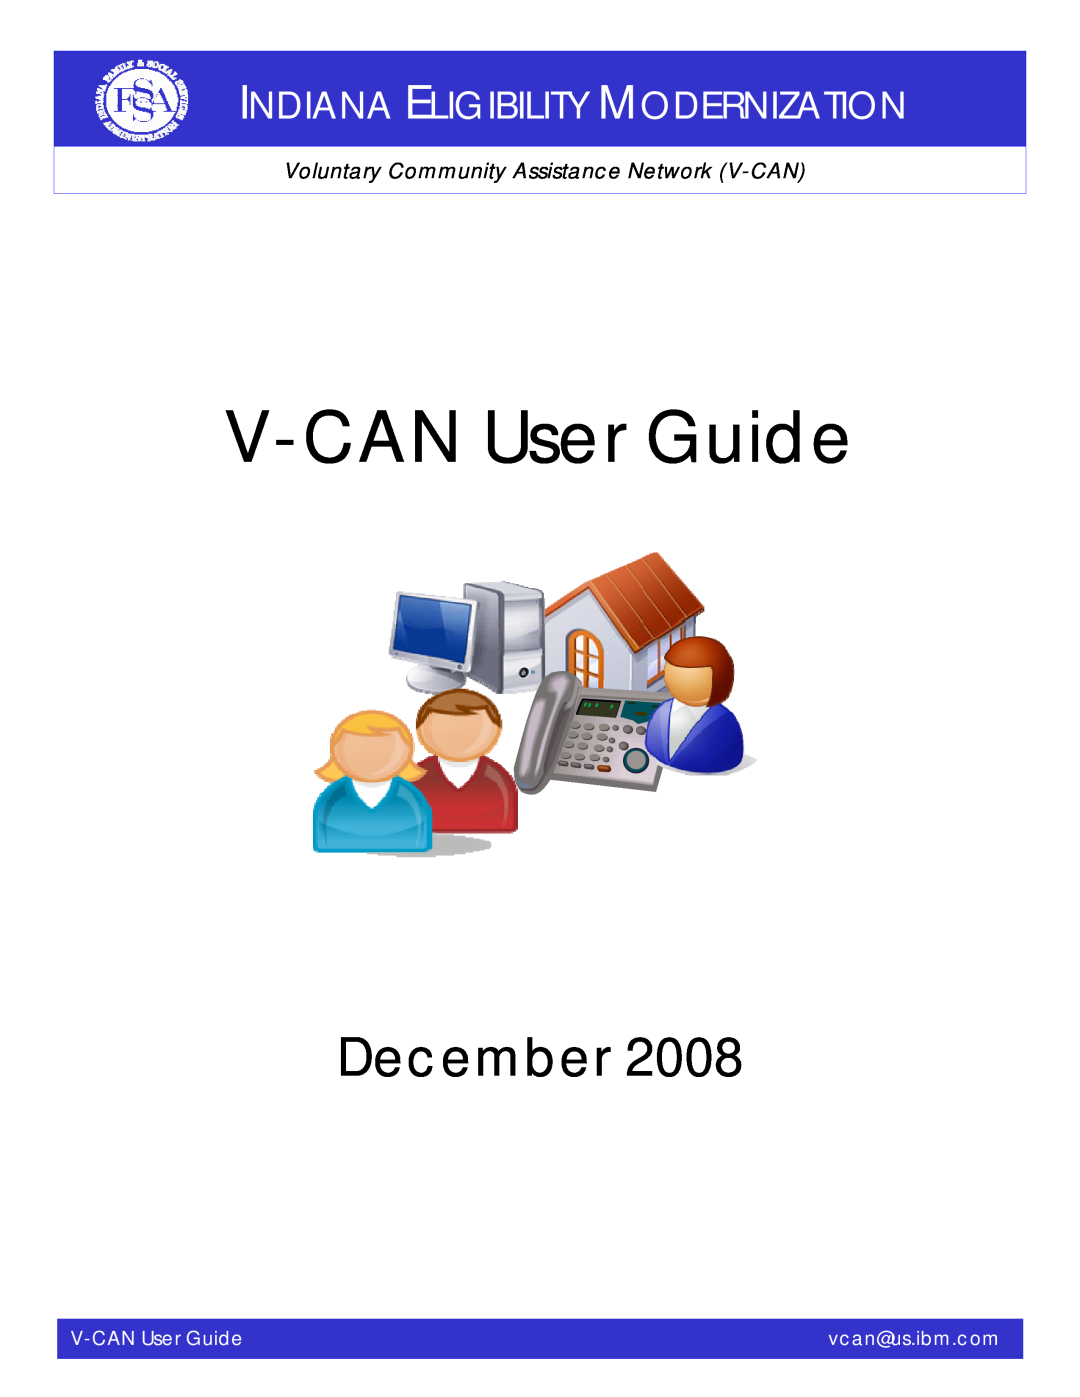 IBM manual Indiana Eligibility Modernization, Voluntary Community Assistance Network V-CAN, V-CAN User Guide, December 